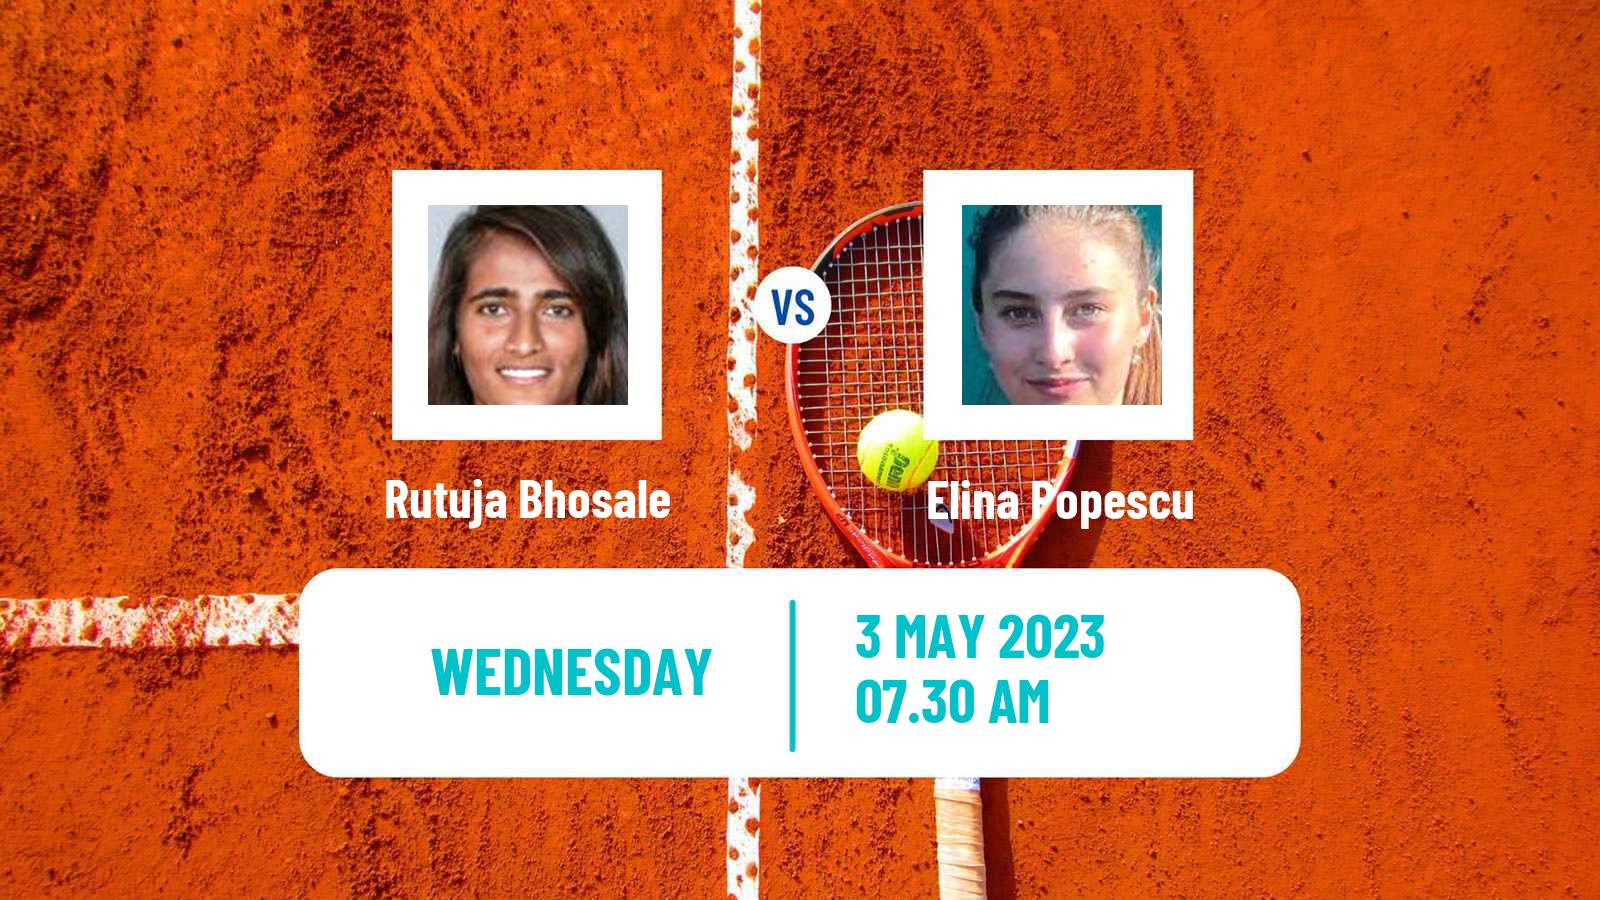 Tennis ITF Tournaments Rutuja Bhosale - Elina Popescu